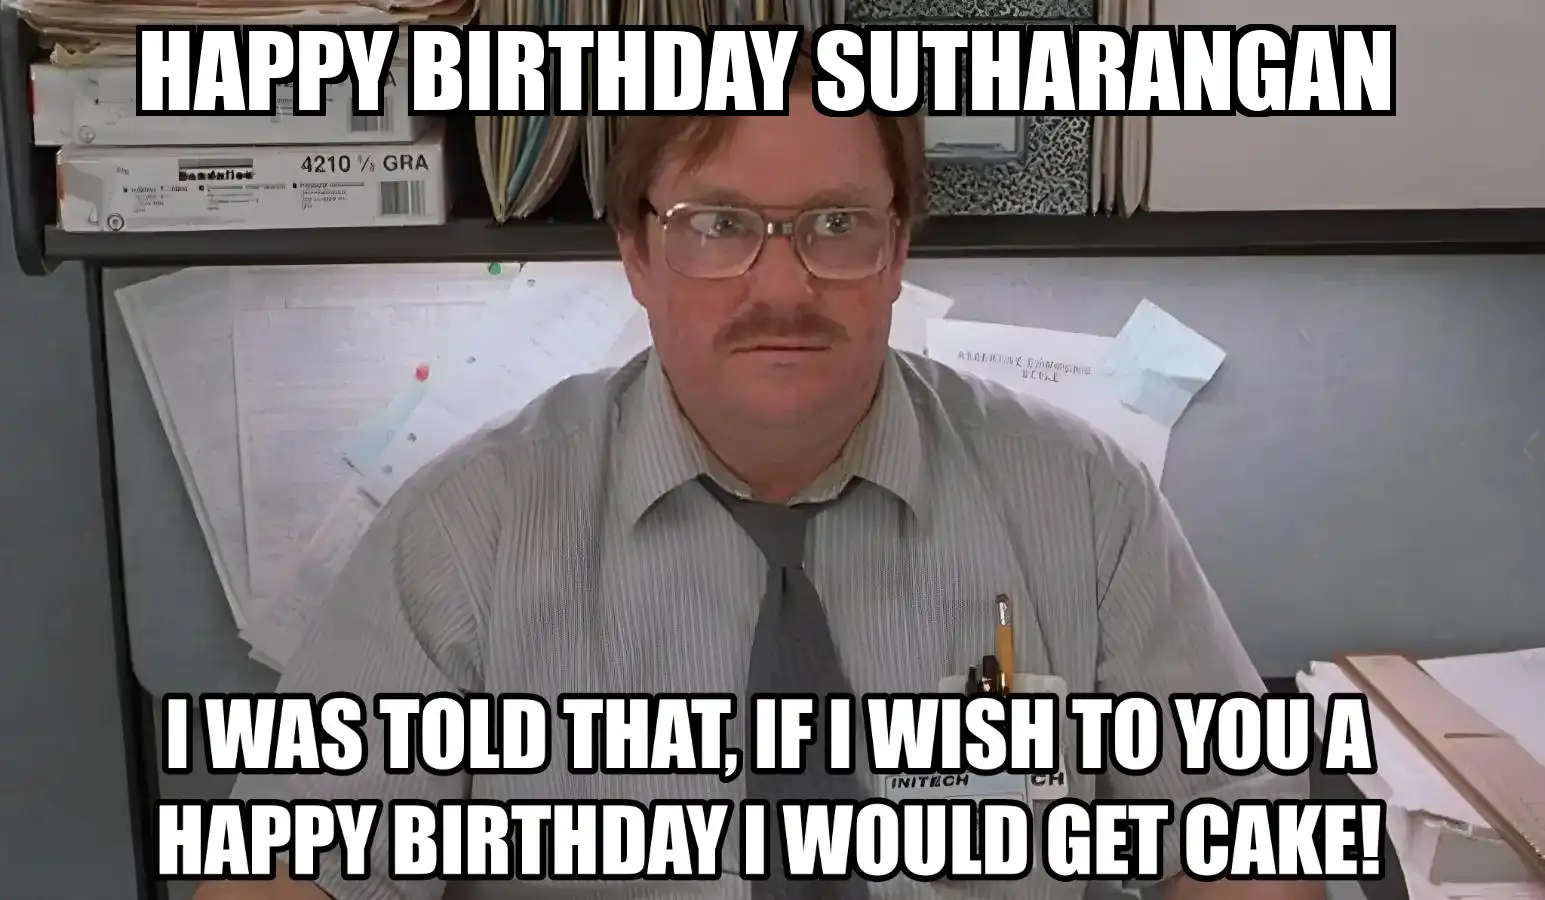 Happy Birthday Sutharangan I Would Get A Cake Meme